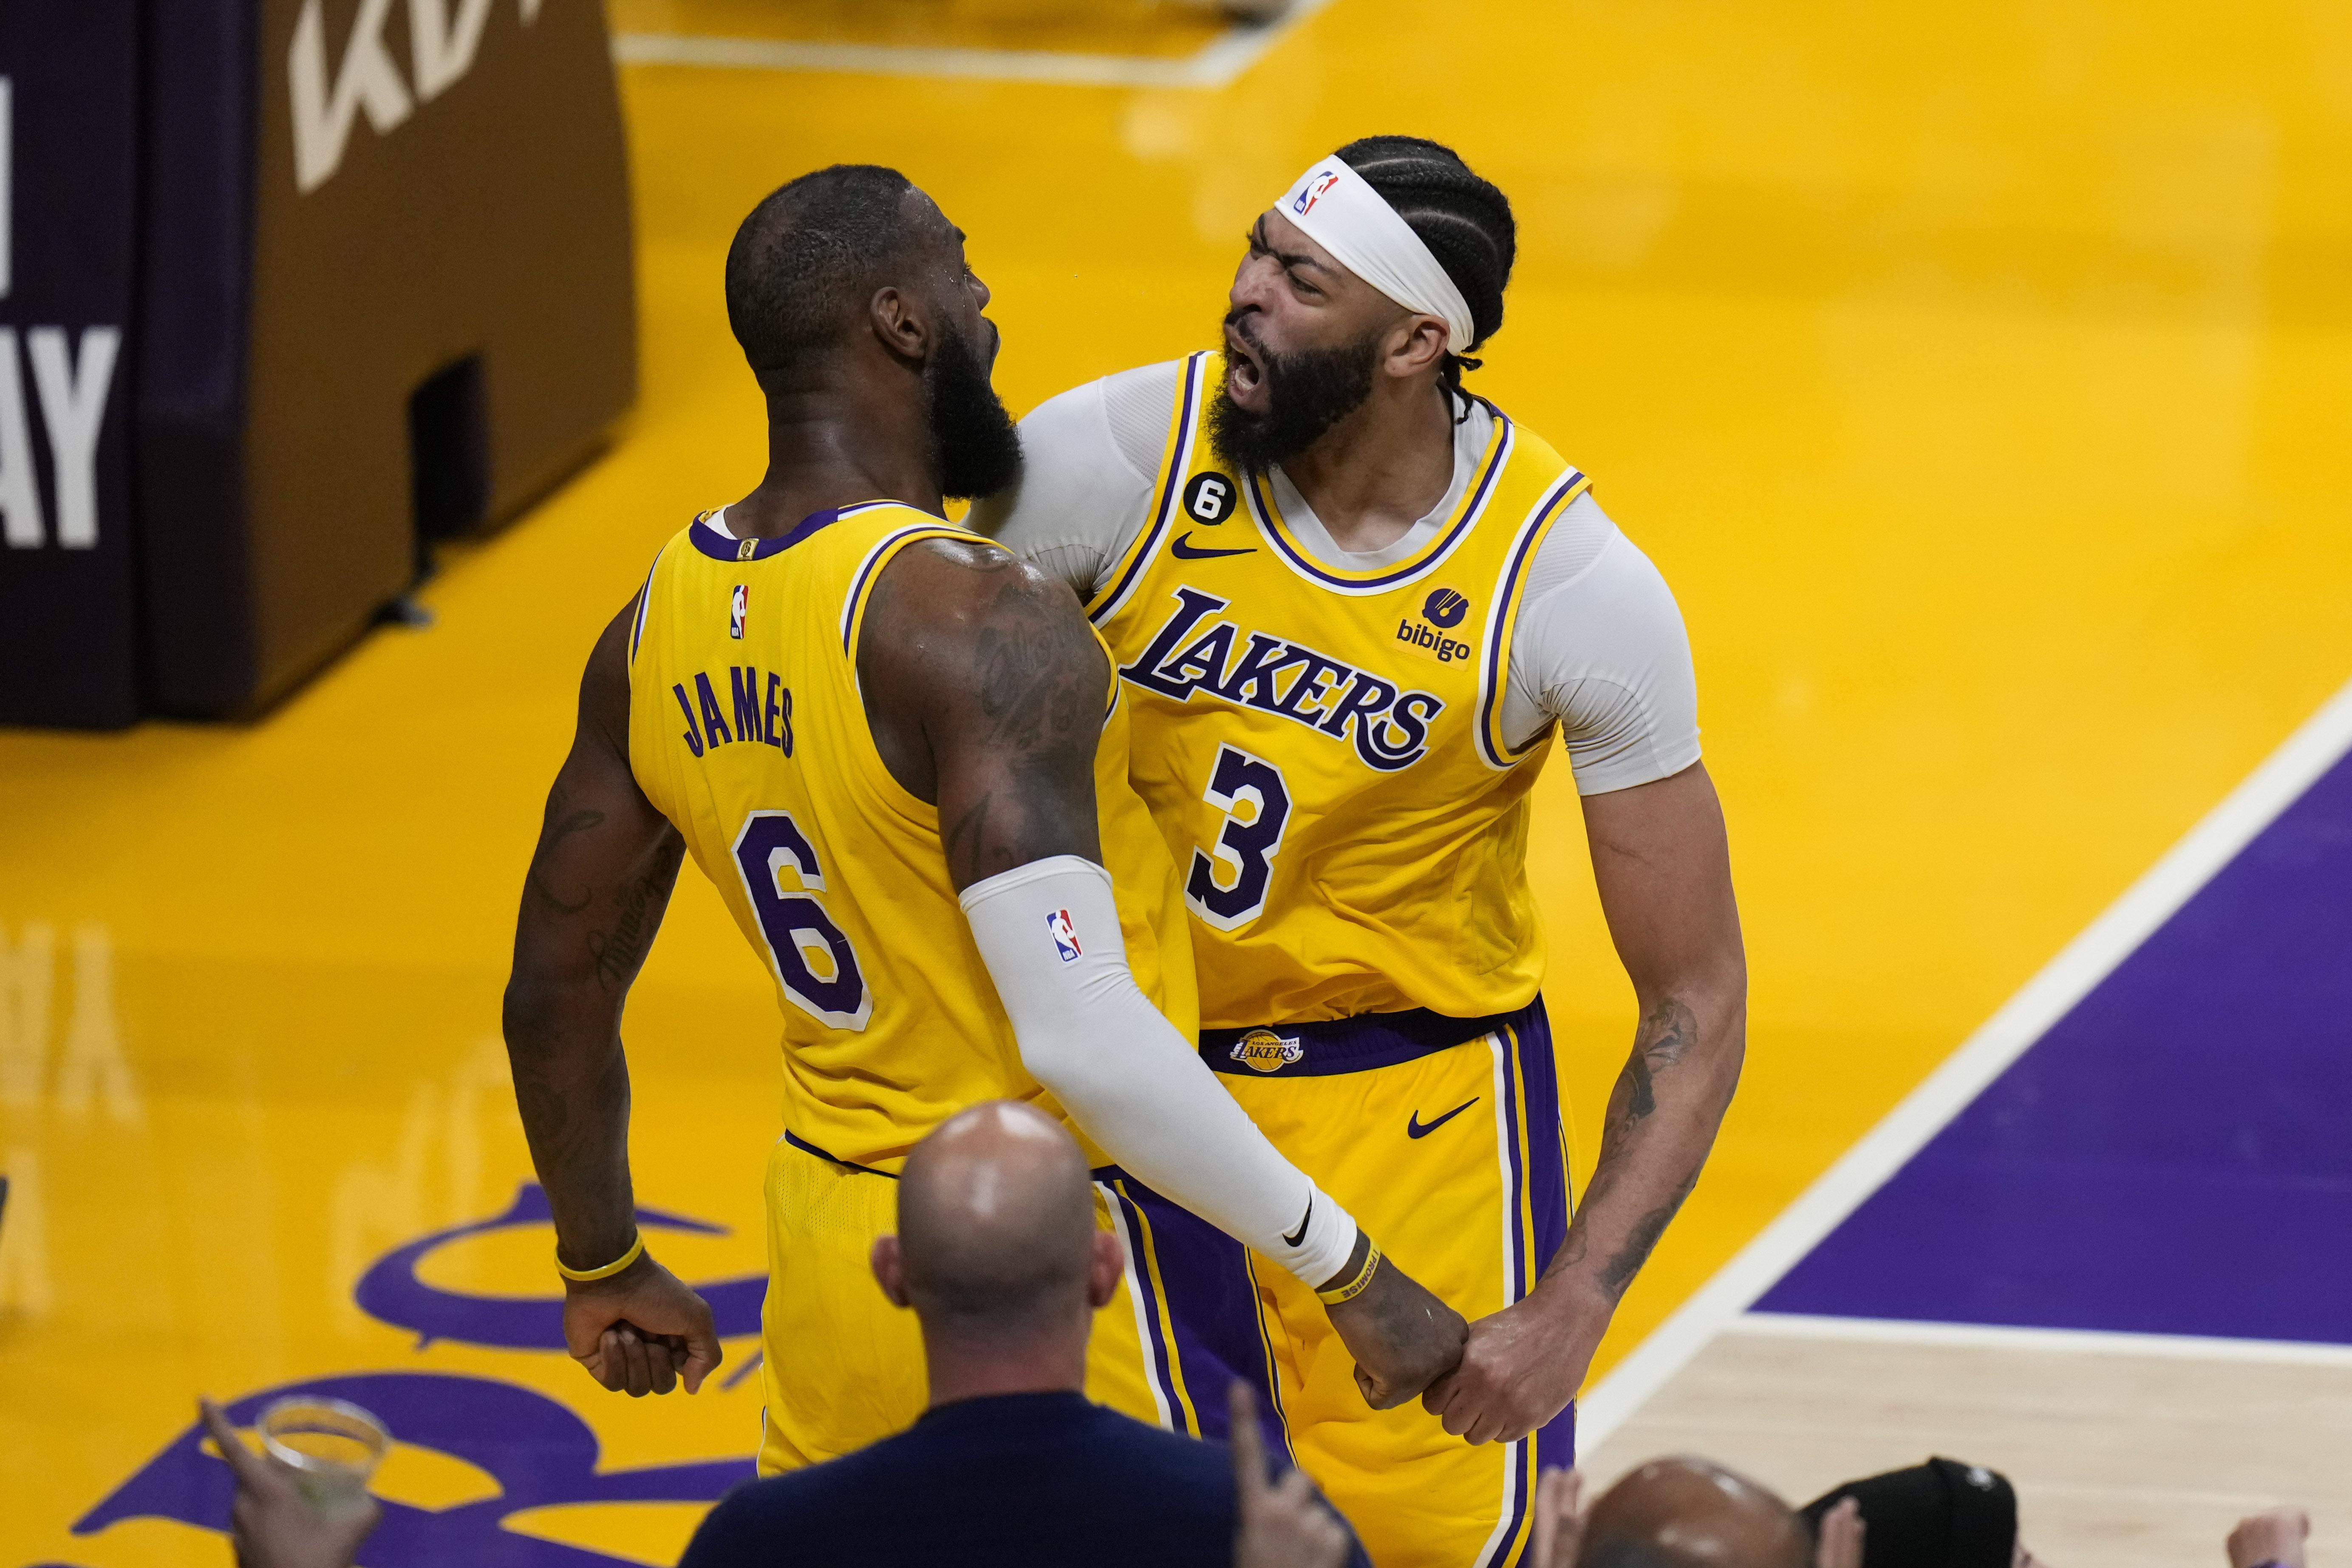 Los Angeles Lakers vs Phoenix Suns free live stream, Game 4 score